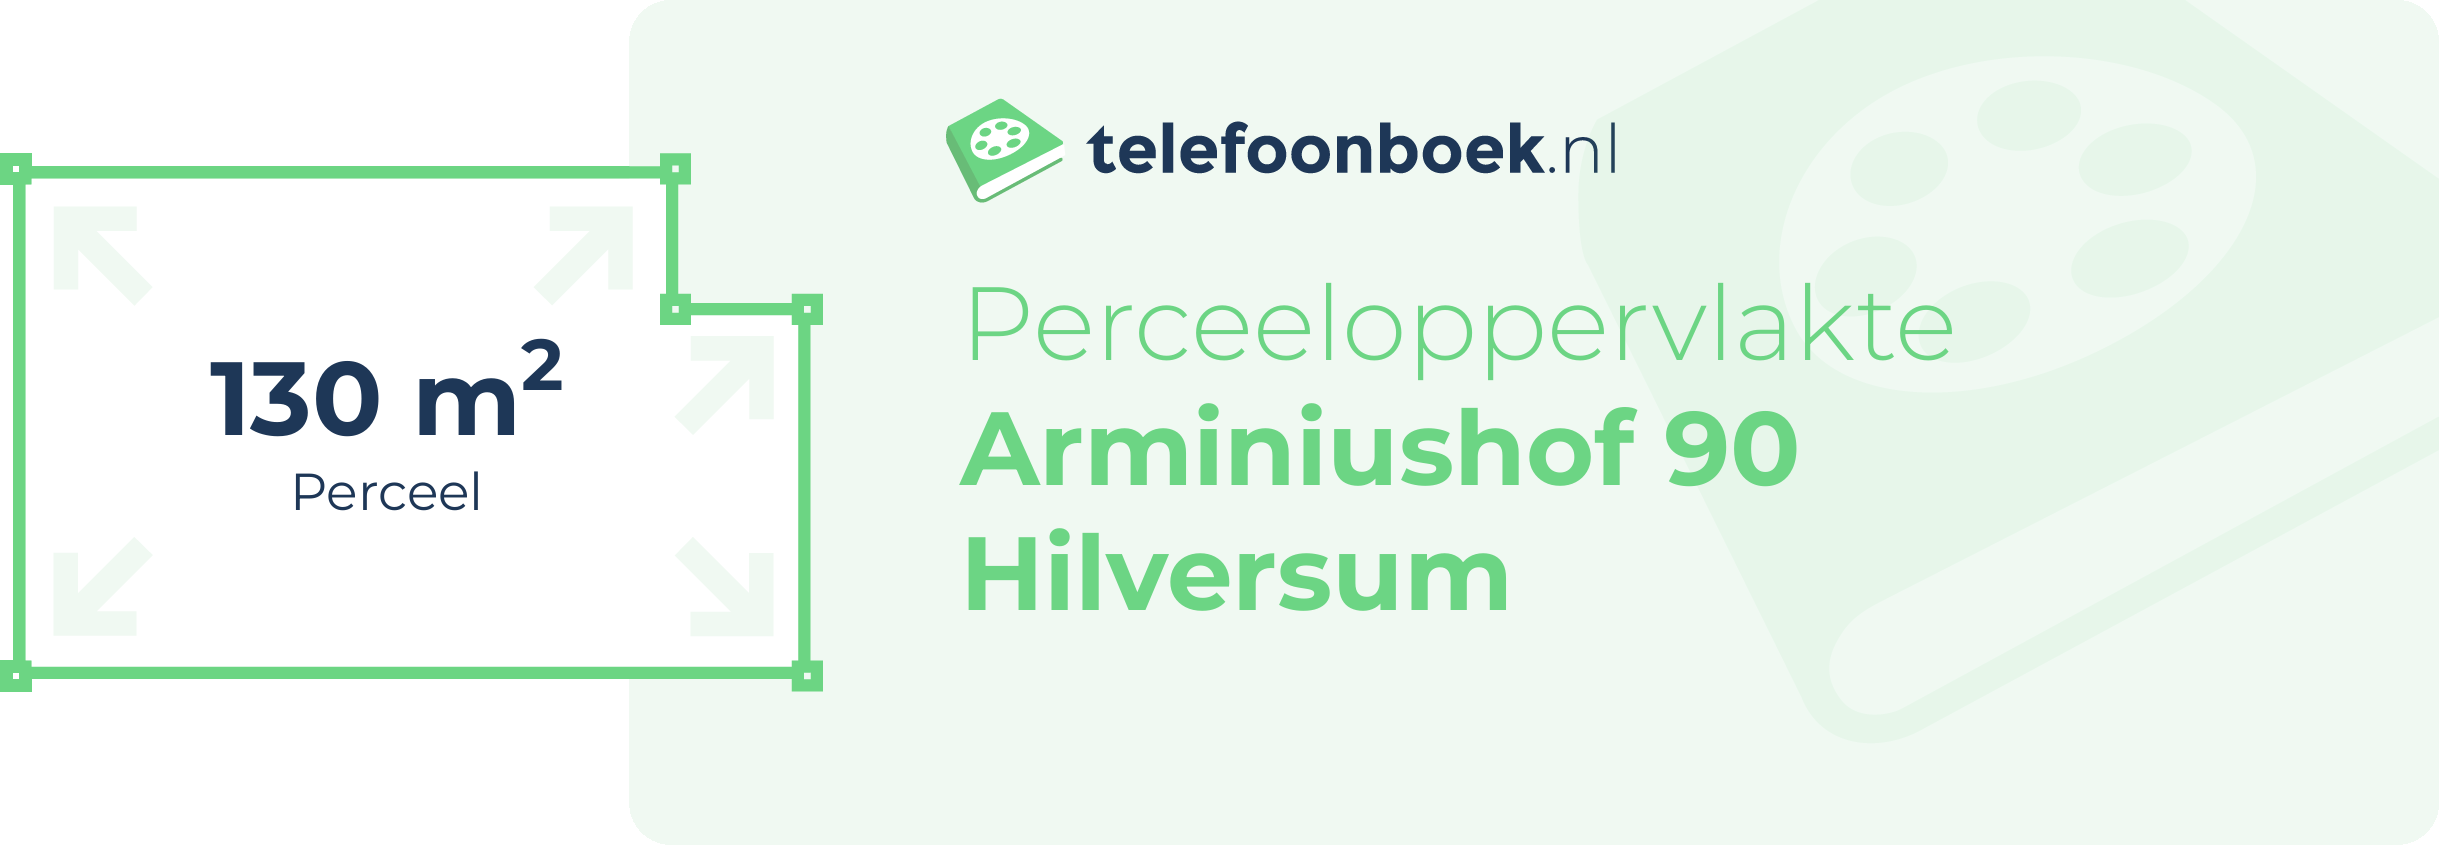 Perceeloppervlakte Arminiushof 90 Hilversum